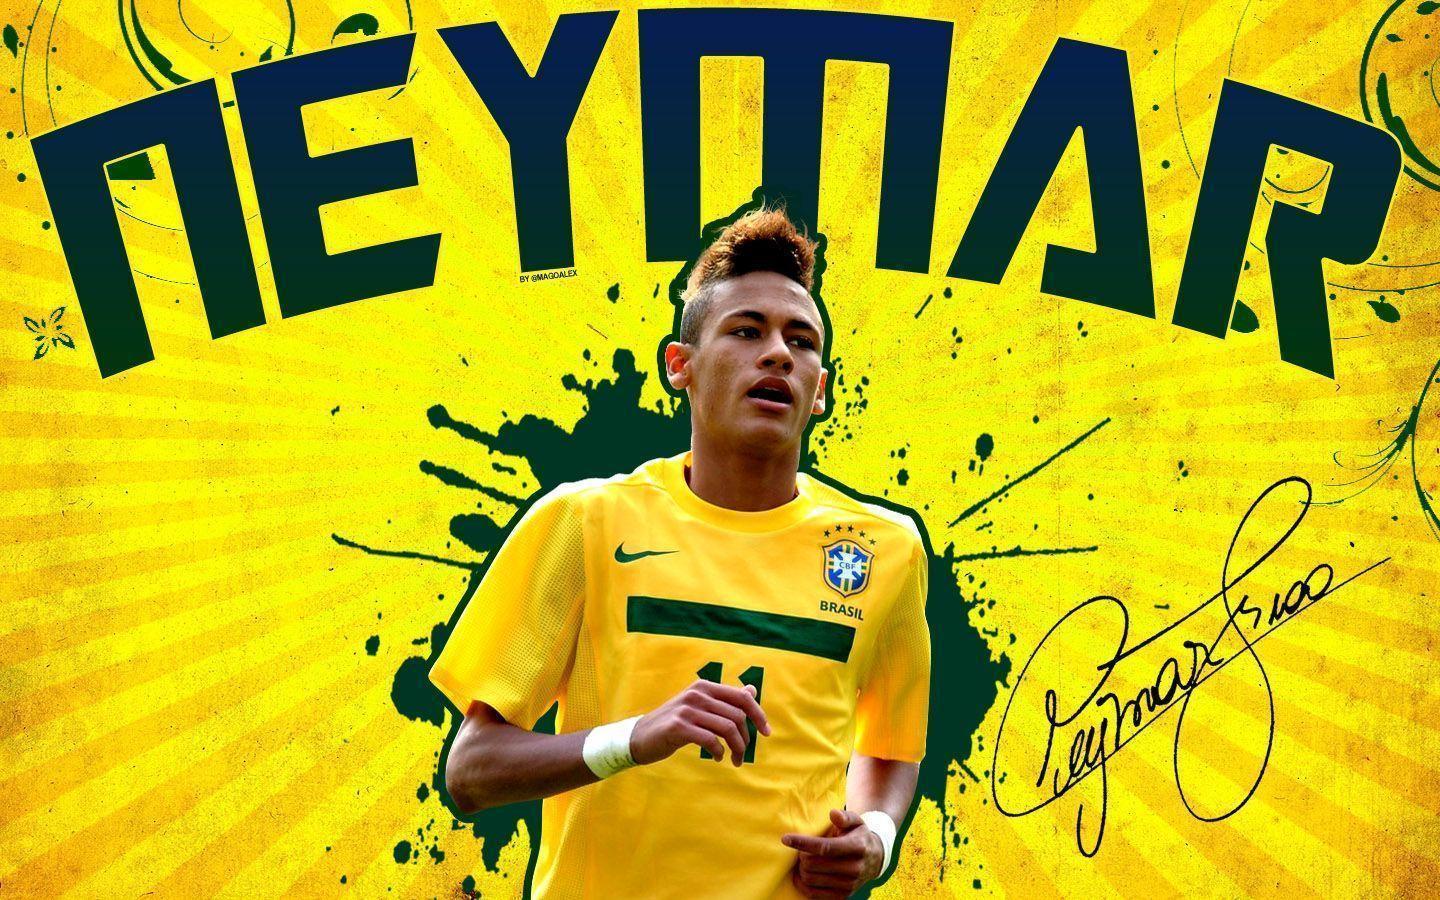 Neymar Brazil background wallpaper for computer